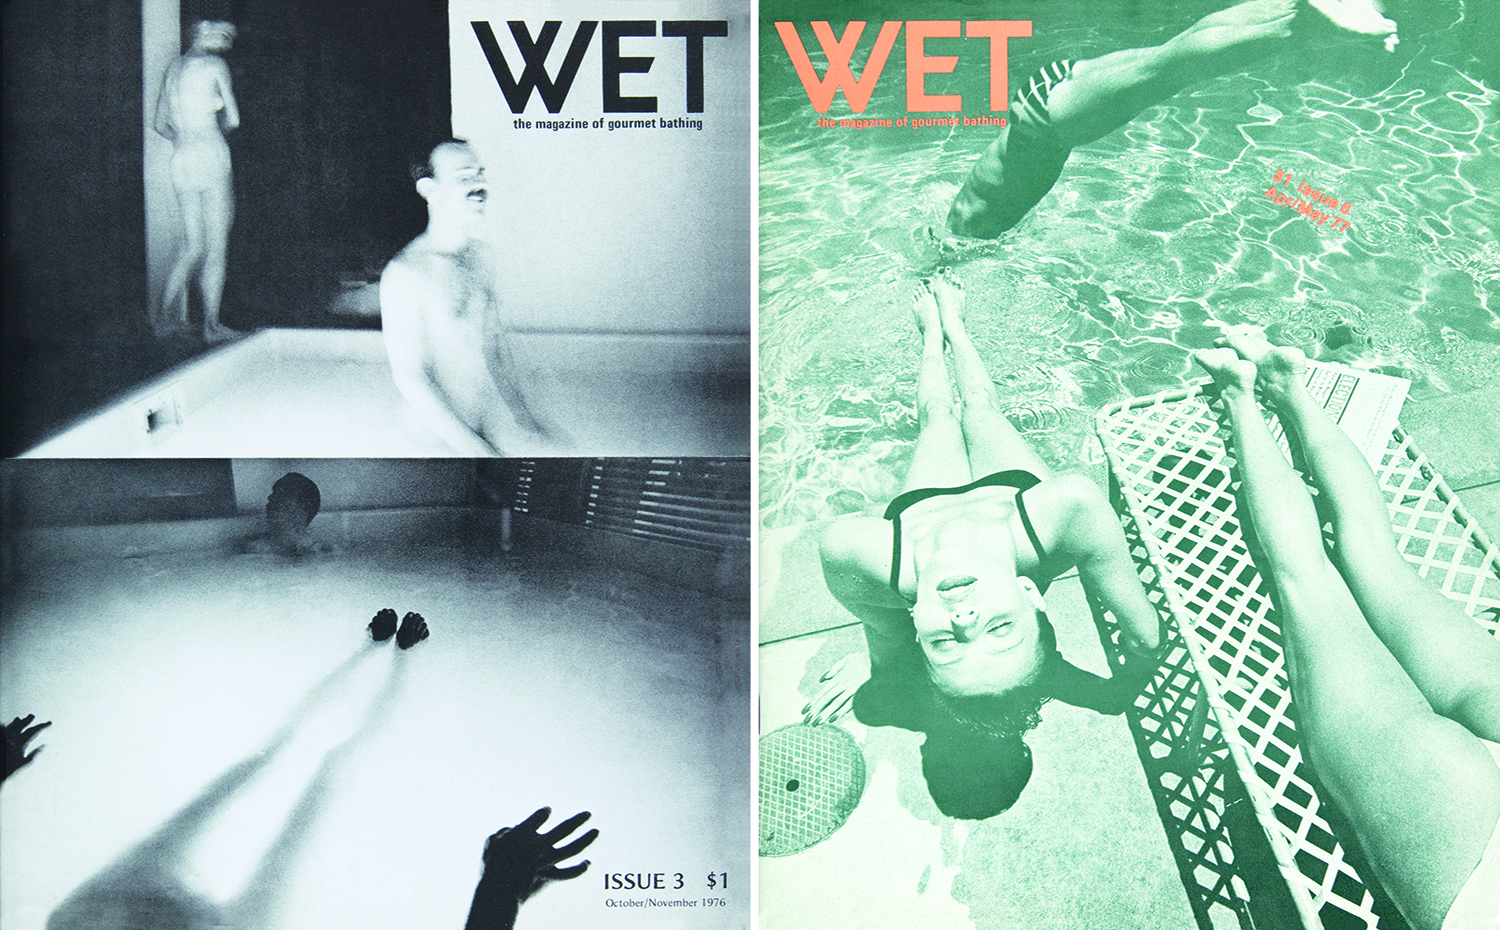 wet. La revista WET Magazine, dedicada a la cultura del baño, se publicó de 1976 a 1981 en Venice (California), por iniciativa del fotógrafo y artista Leonard Koren